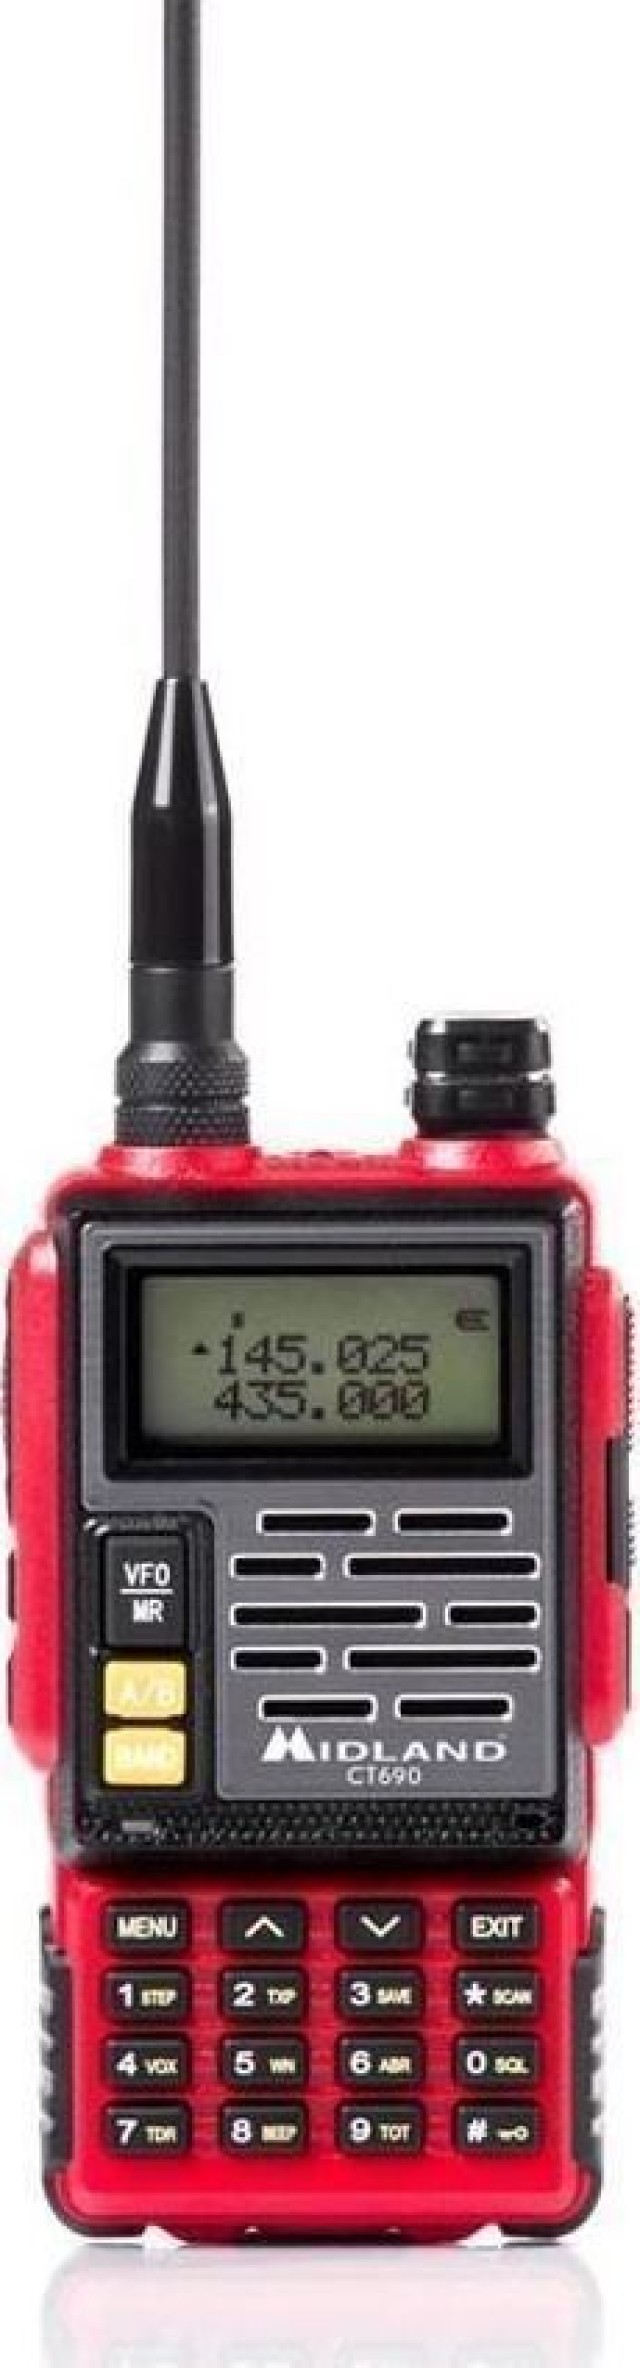 Midland CT-690 ricetrasmettitore portatile Dual Band VHF / UHF da 6 Watt (rosso)